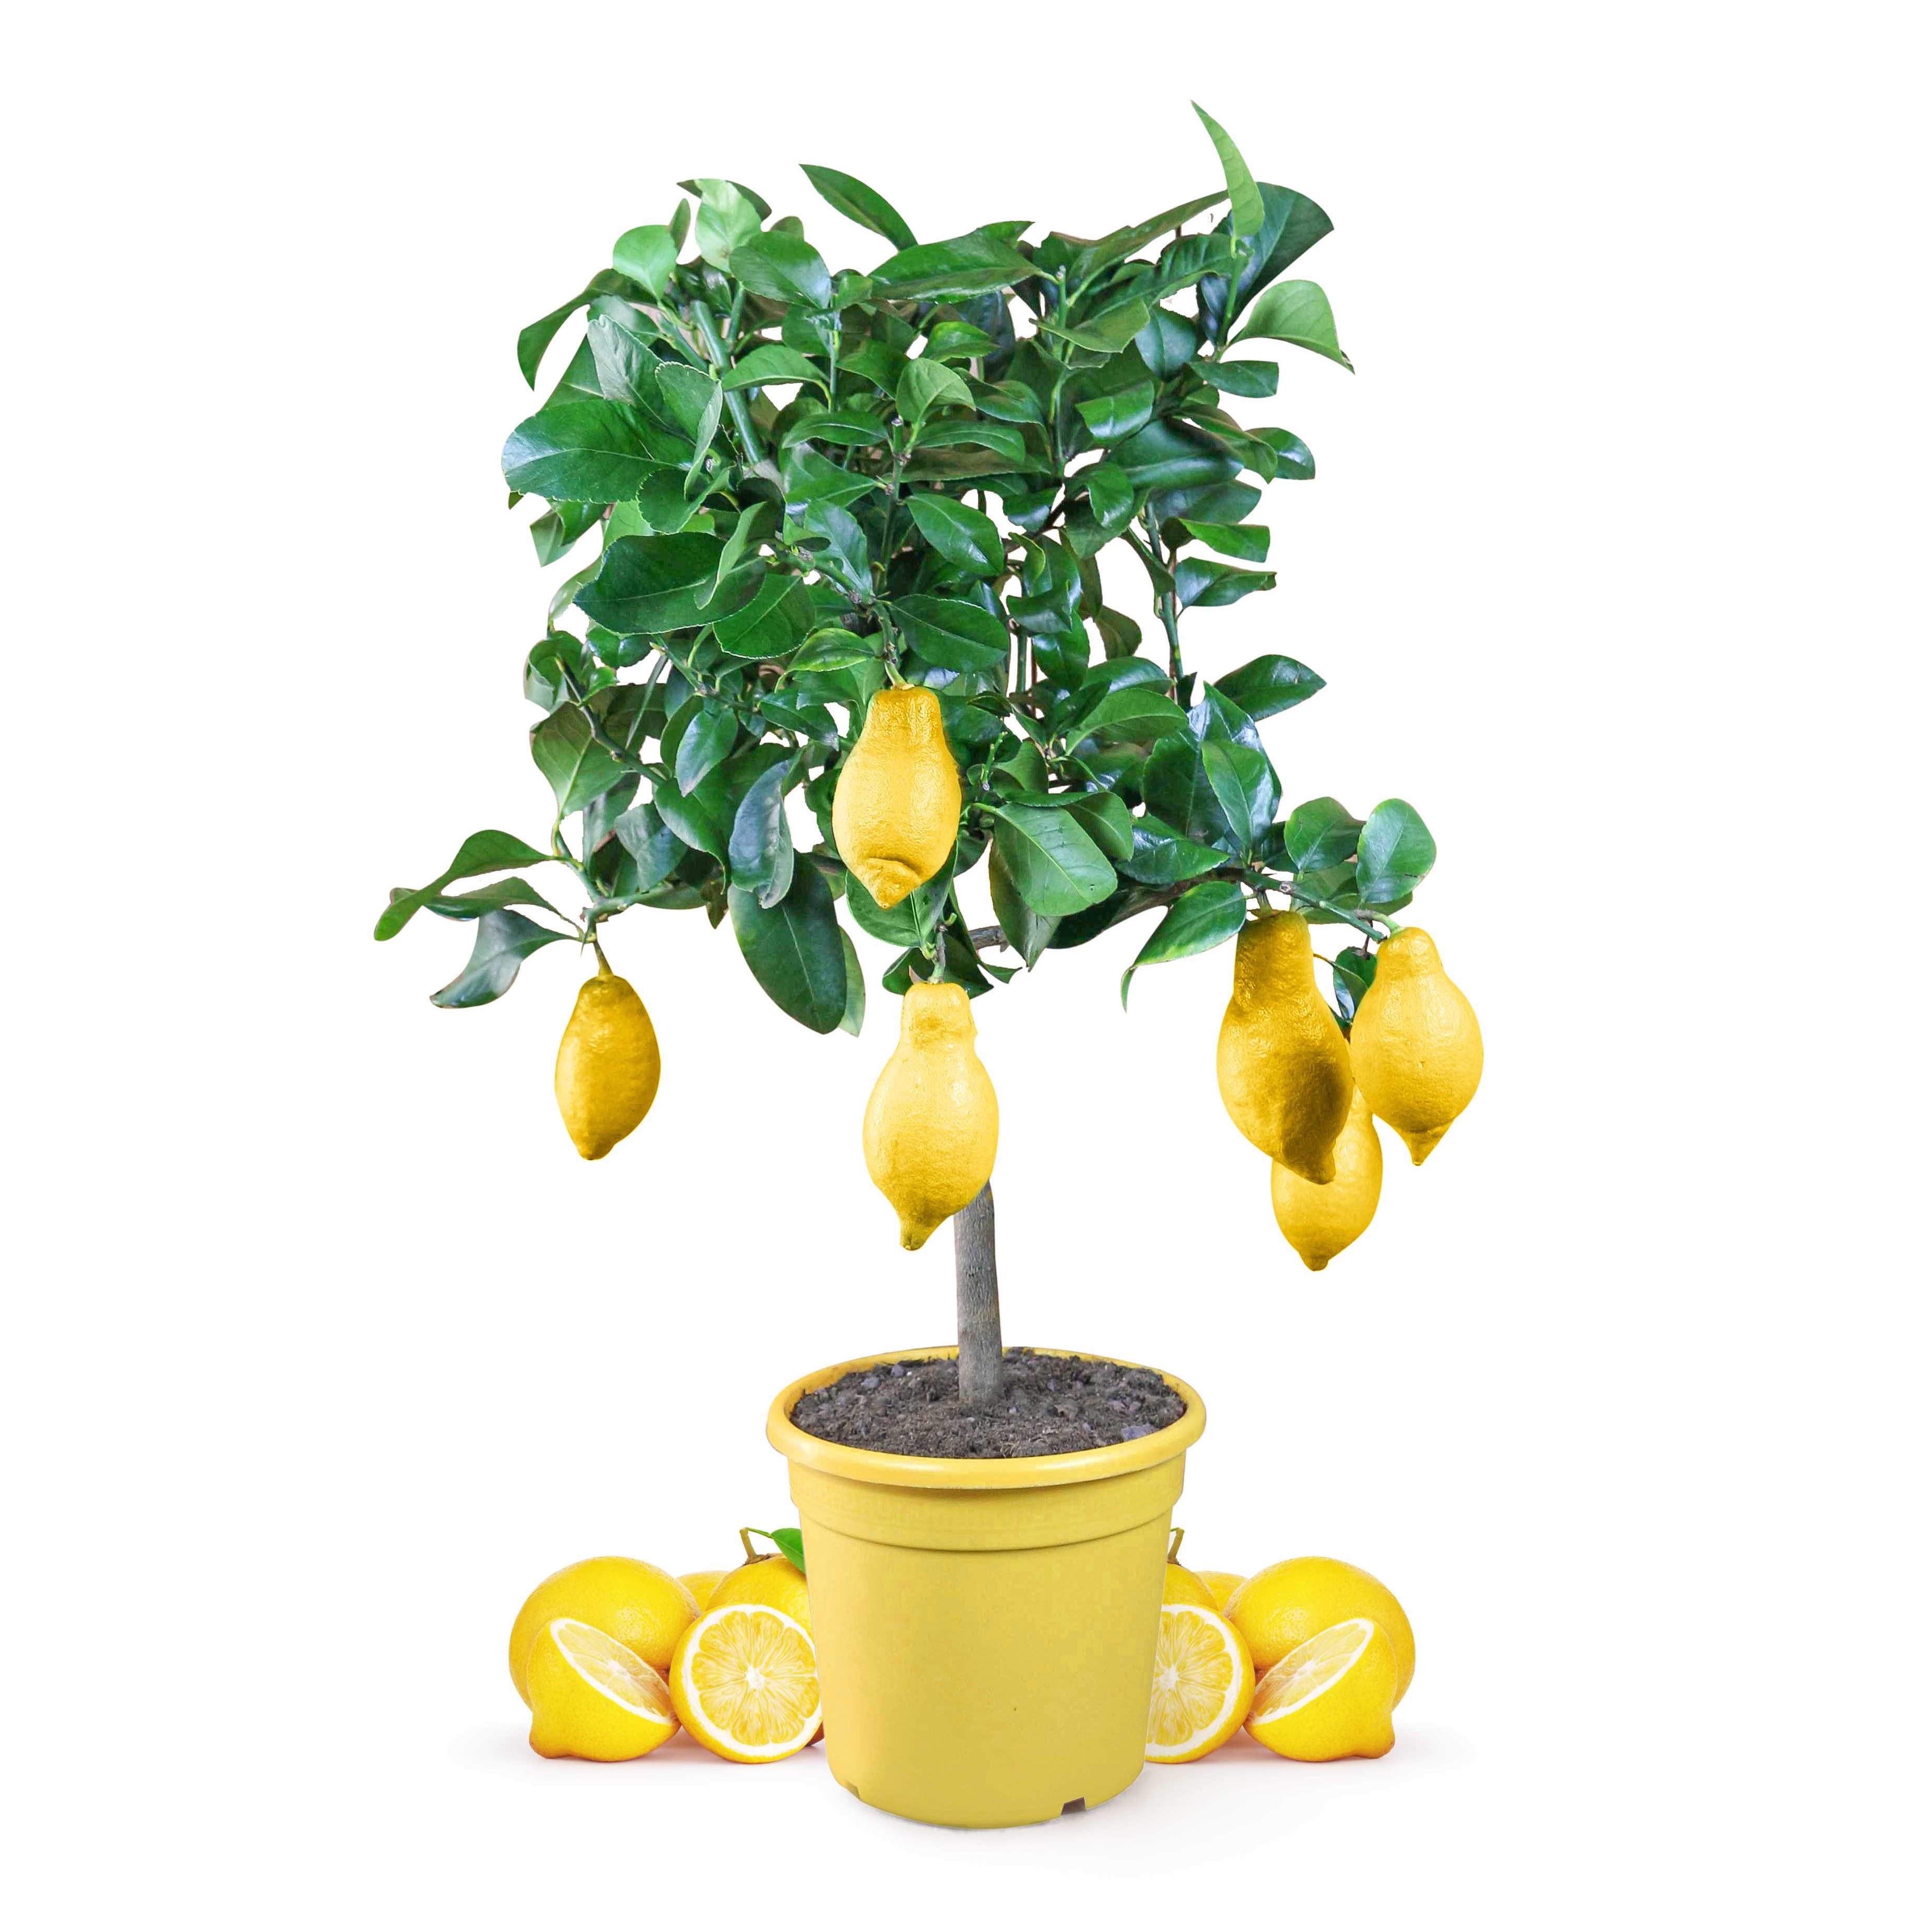 Zitronenbaum  - Citrus Limon - echte Zitrone